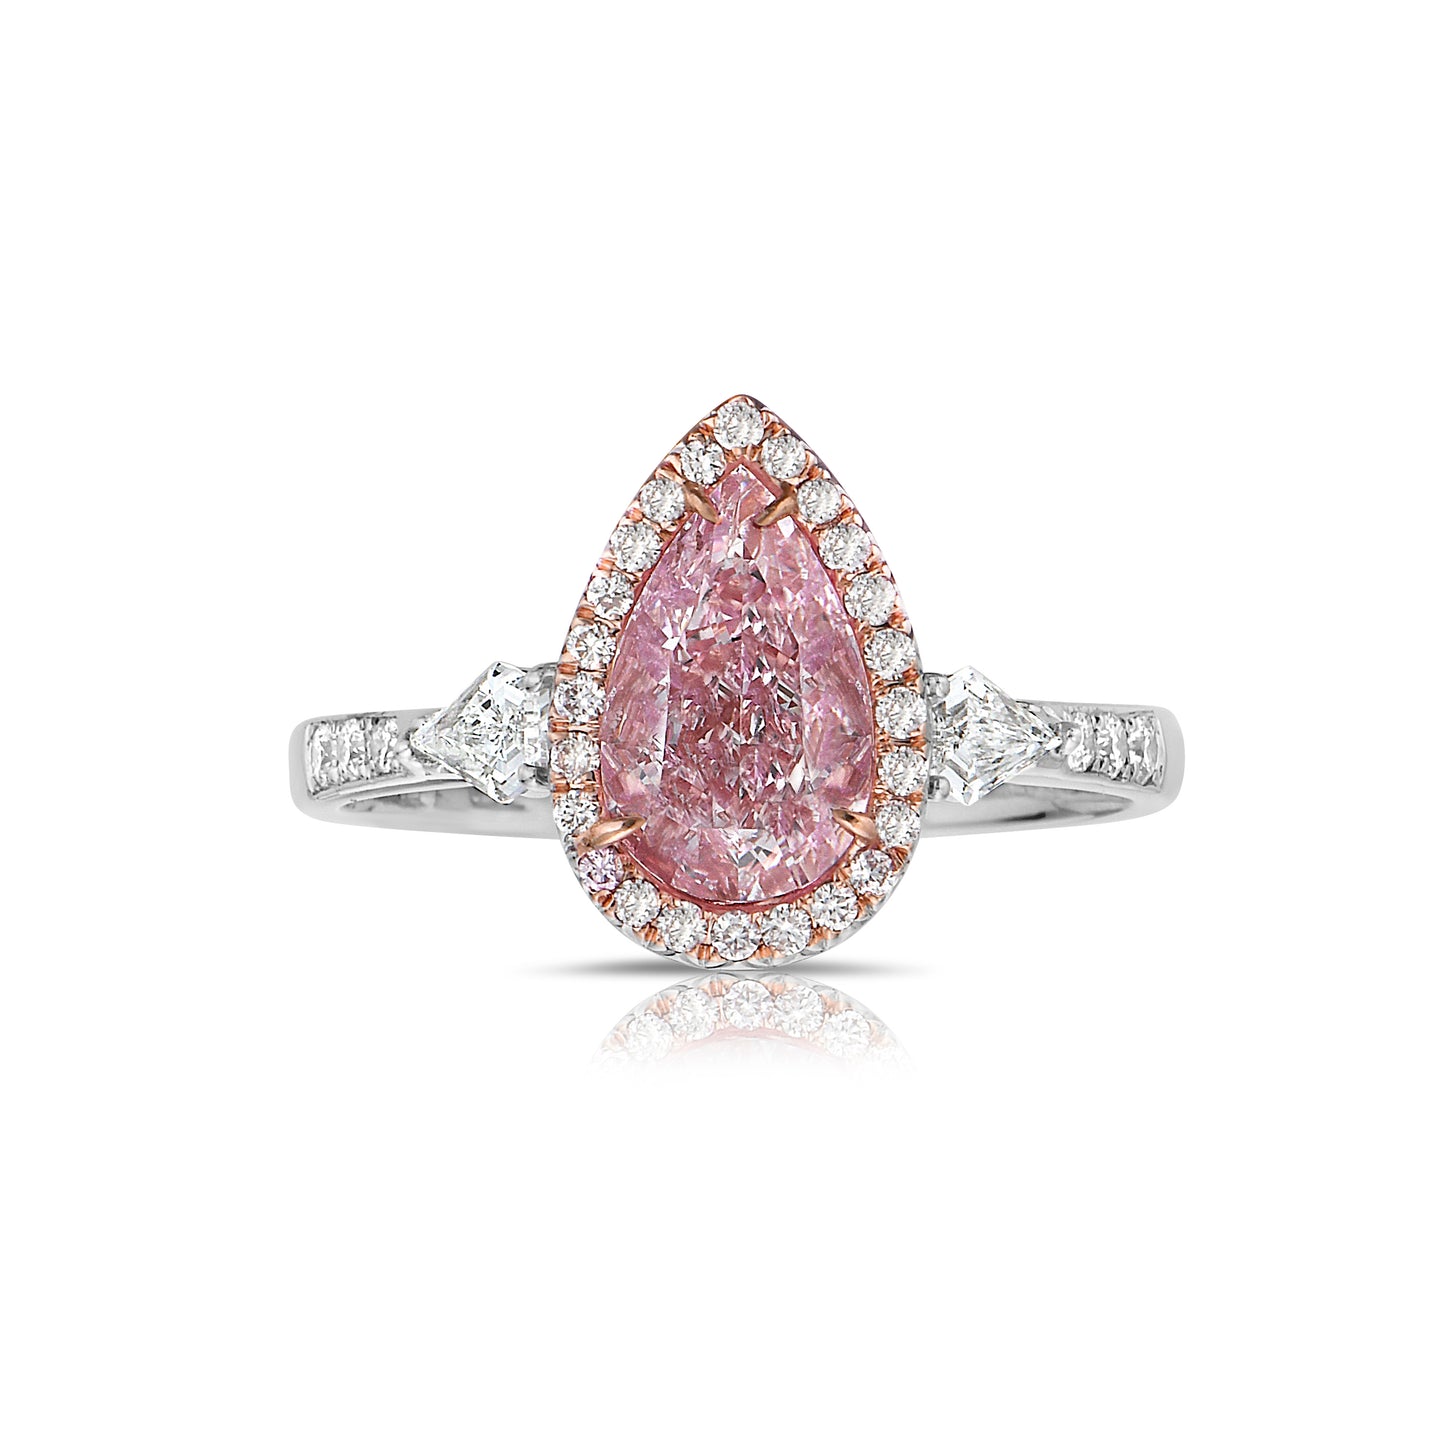 Pink pear shape diamond, pink diamond ring, pink diamond engagement ring, pear shape diamond, natural pink diamond, halo engagement ring, bubblegum pink diamond